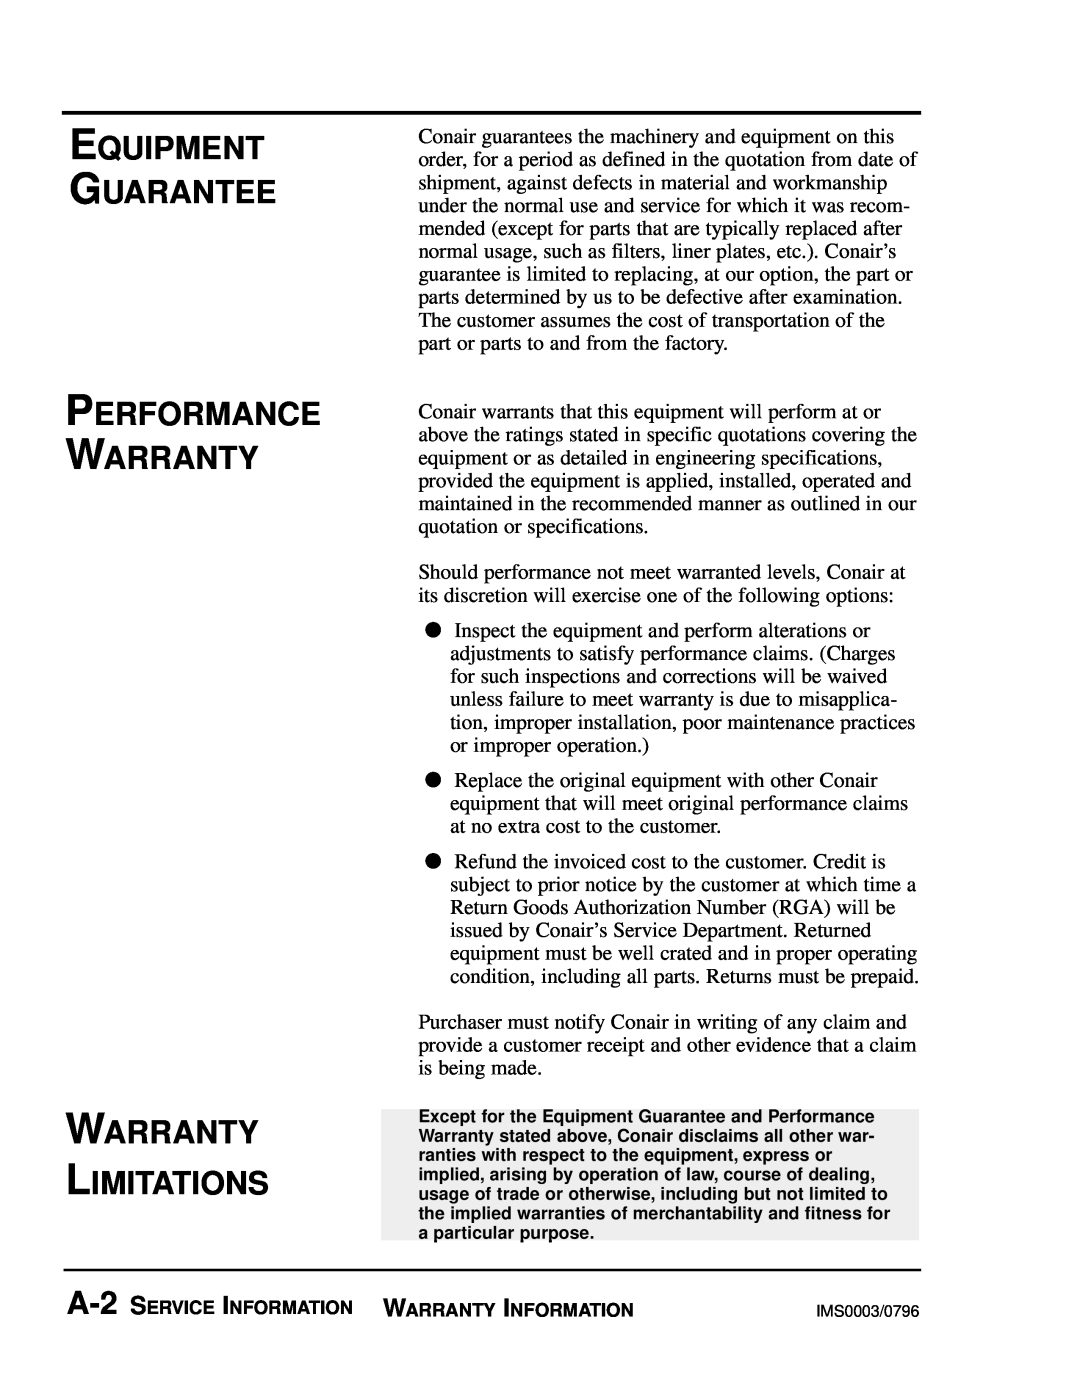 Conair UGH016/0500 manual Equipment Guarantee Performance Warranty, Warranty Limitations 